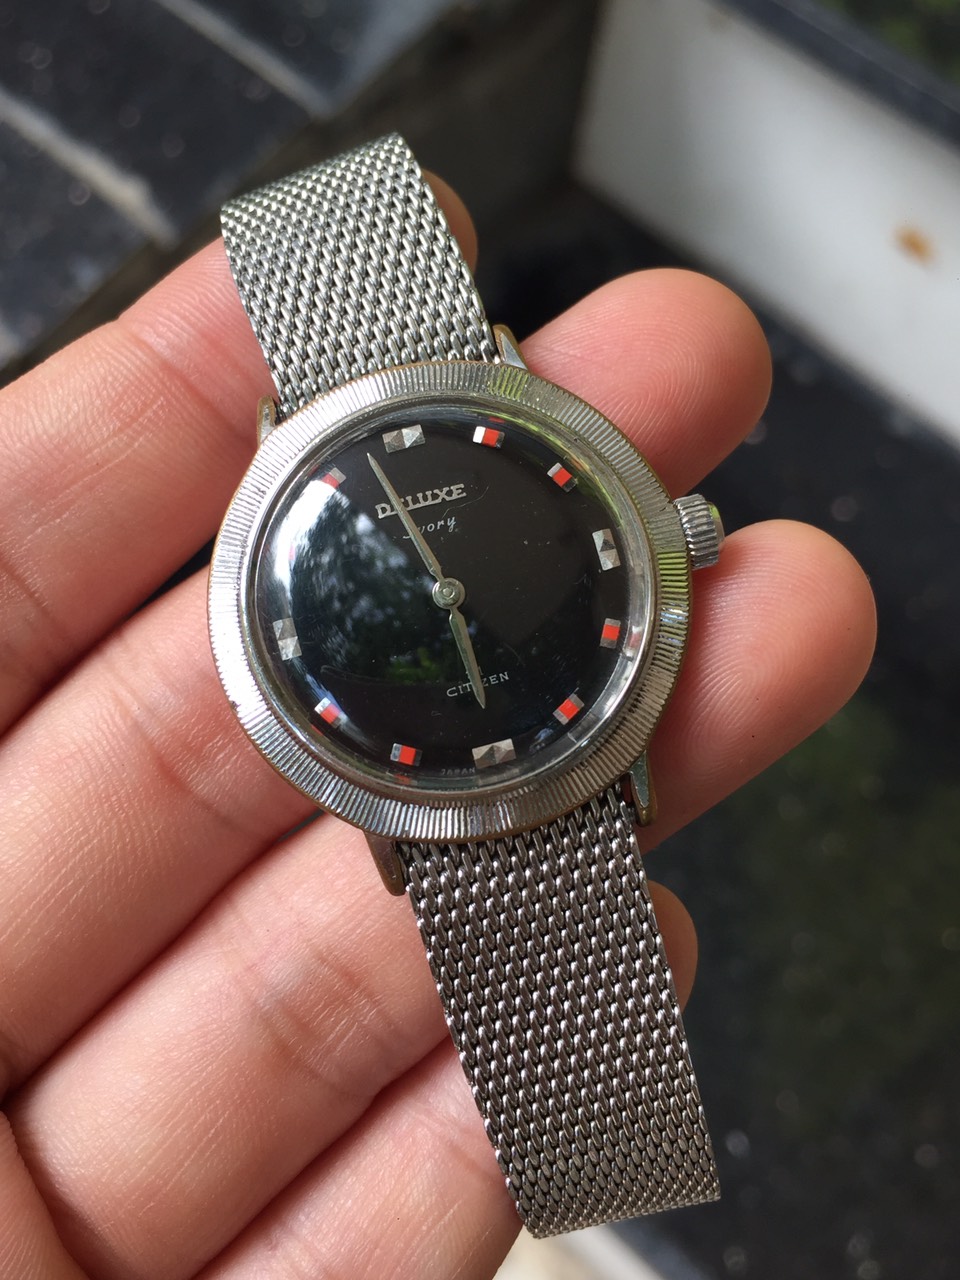 [HCM]Đồng hồ cơ cổ nữ Citizen Deluxe cơ lên cót tay